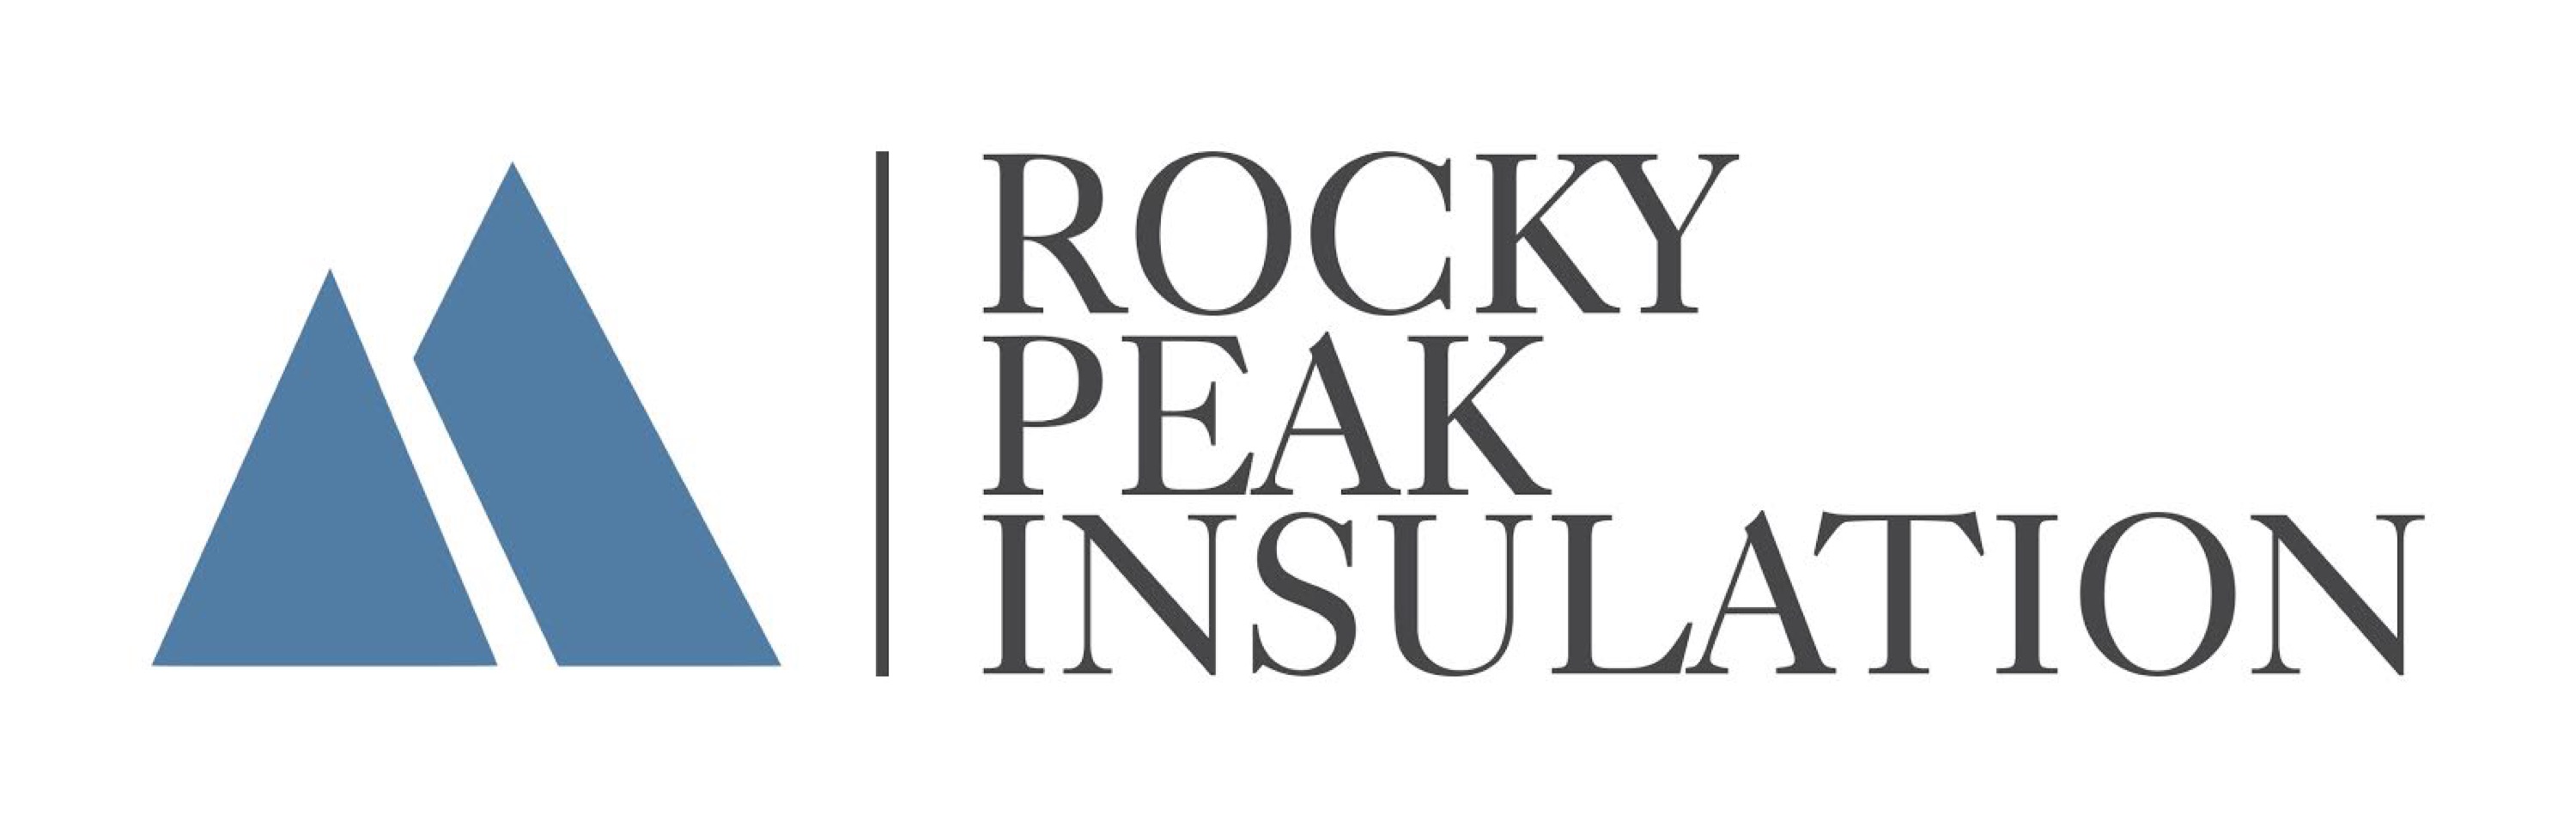 Rocky Peak Insulation Logo